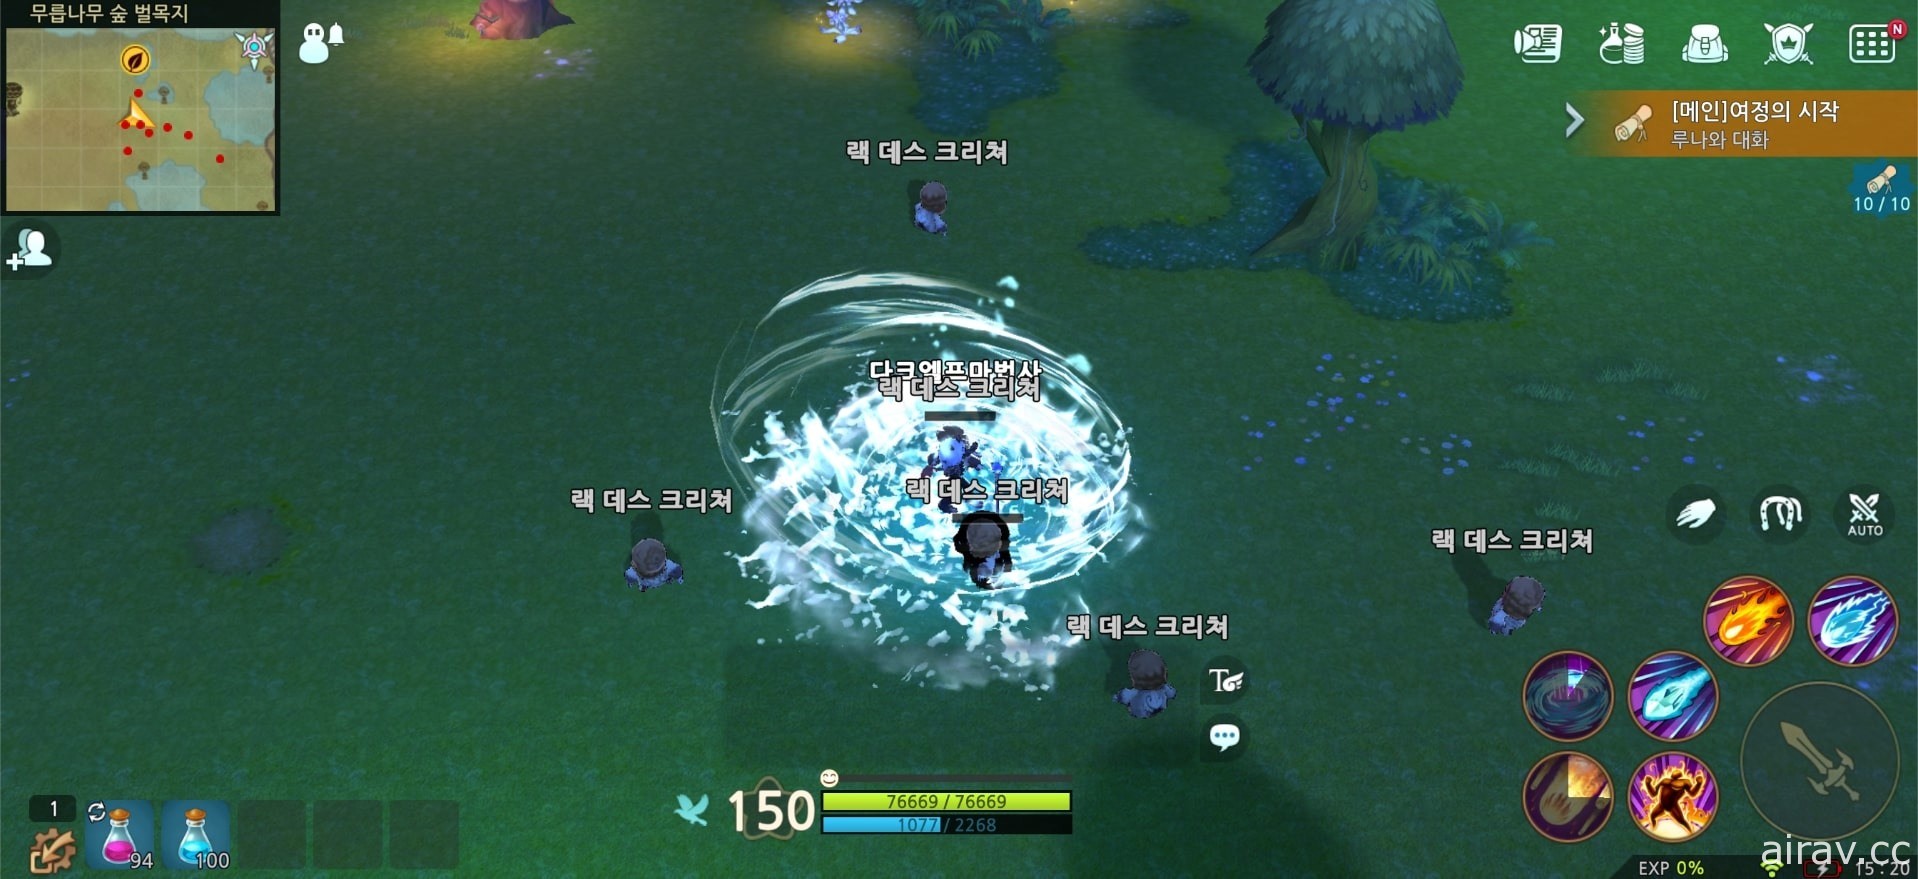 《LUNA Online》改编 MMORPG 新作《LUNA Mobile》于韩国展开 β 测试